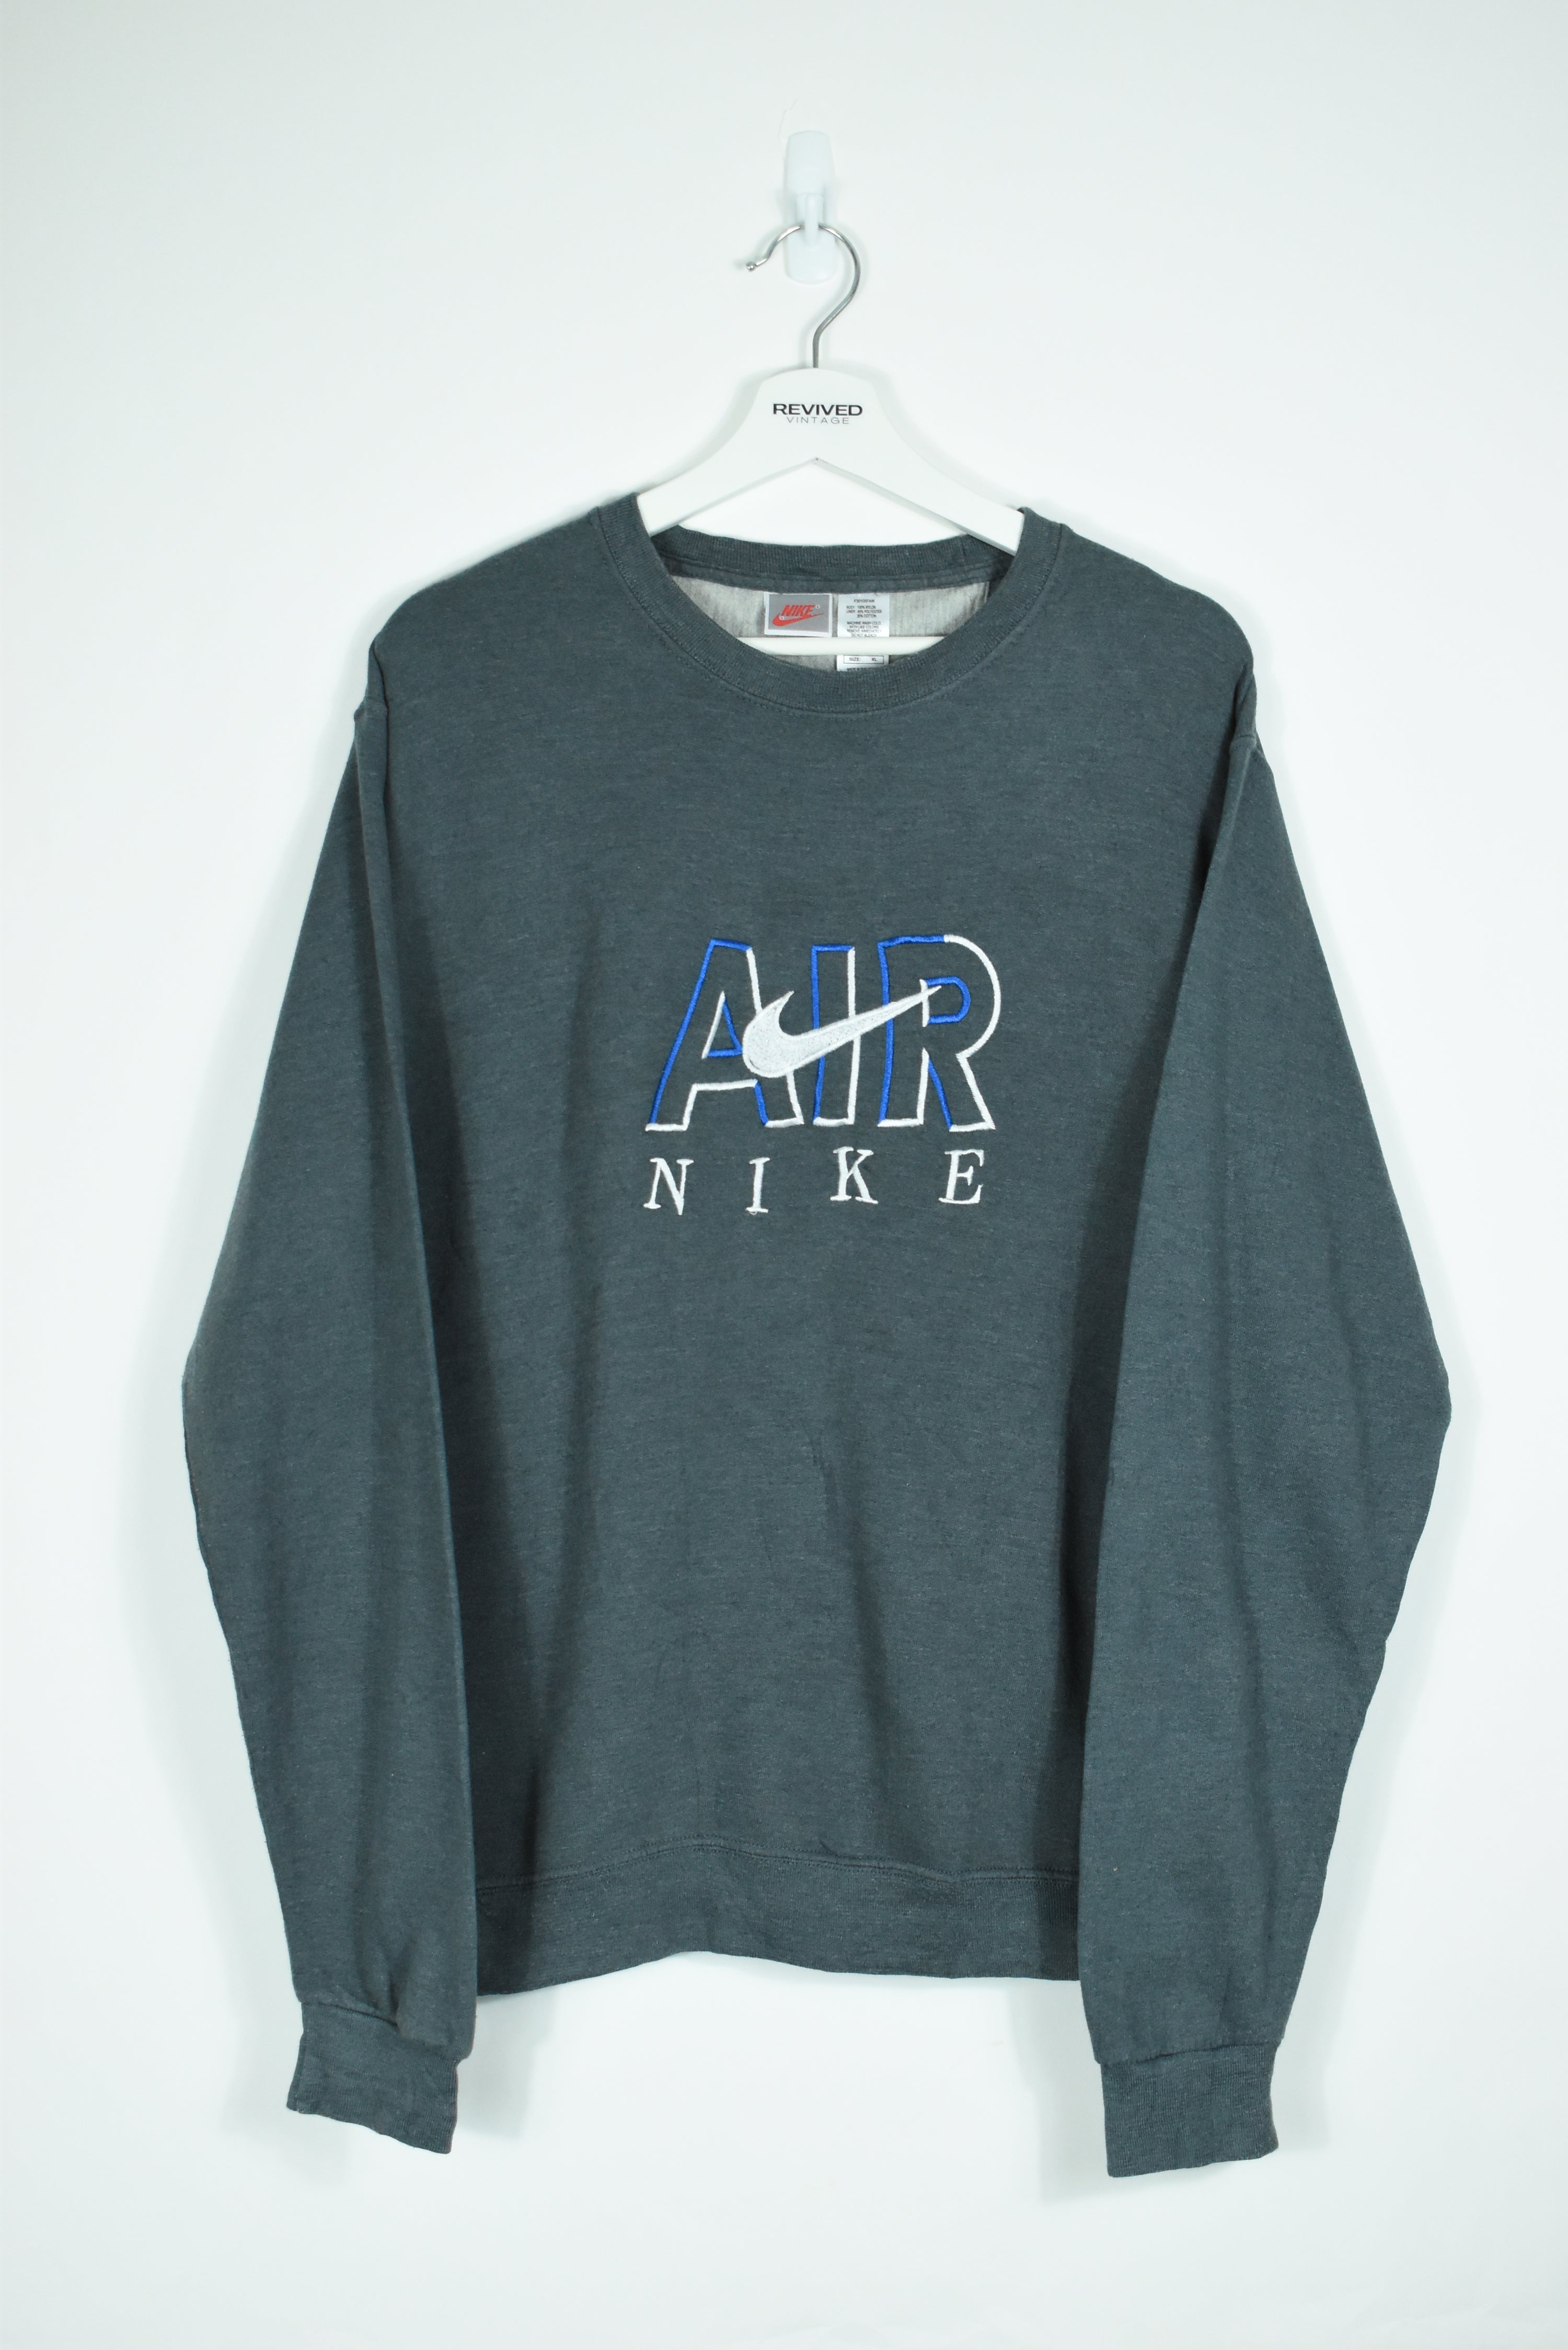 Vintage Nike Air Bootleg Embroidery Grey Sweatshirt Medium